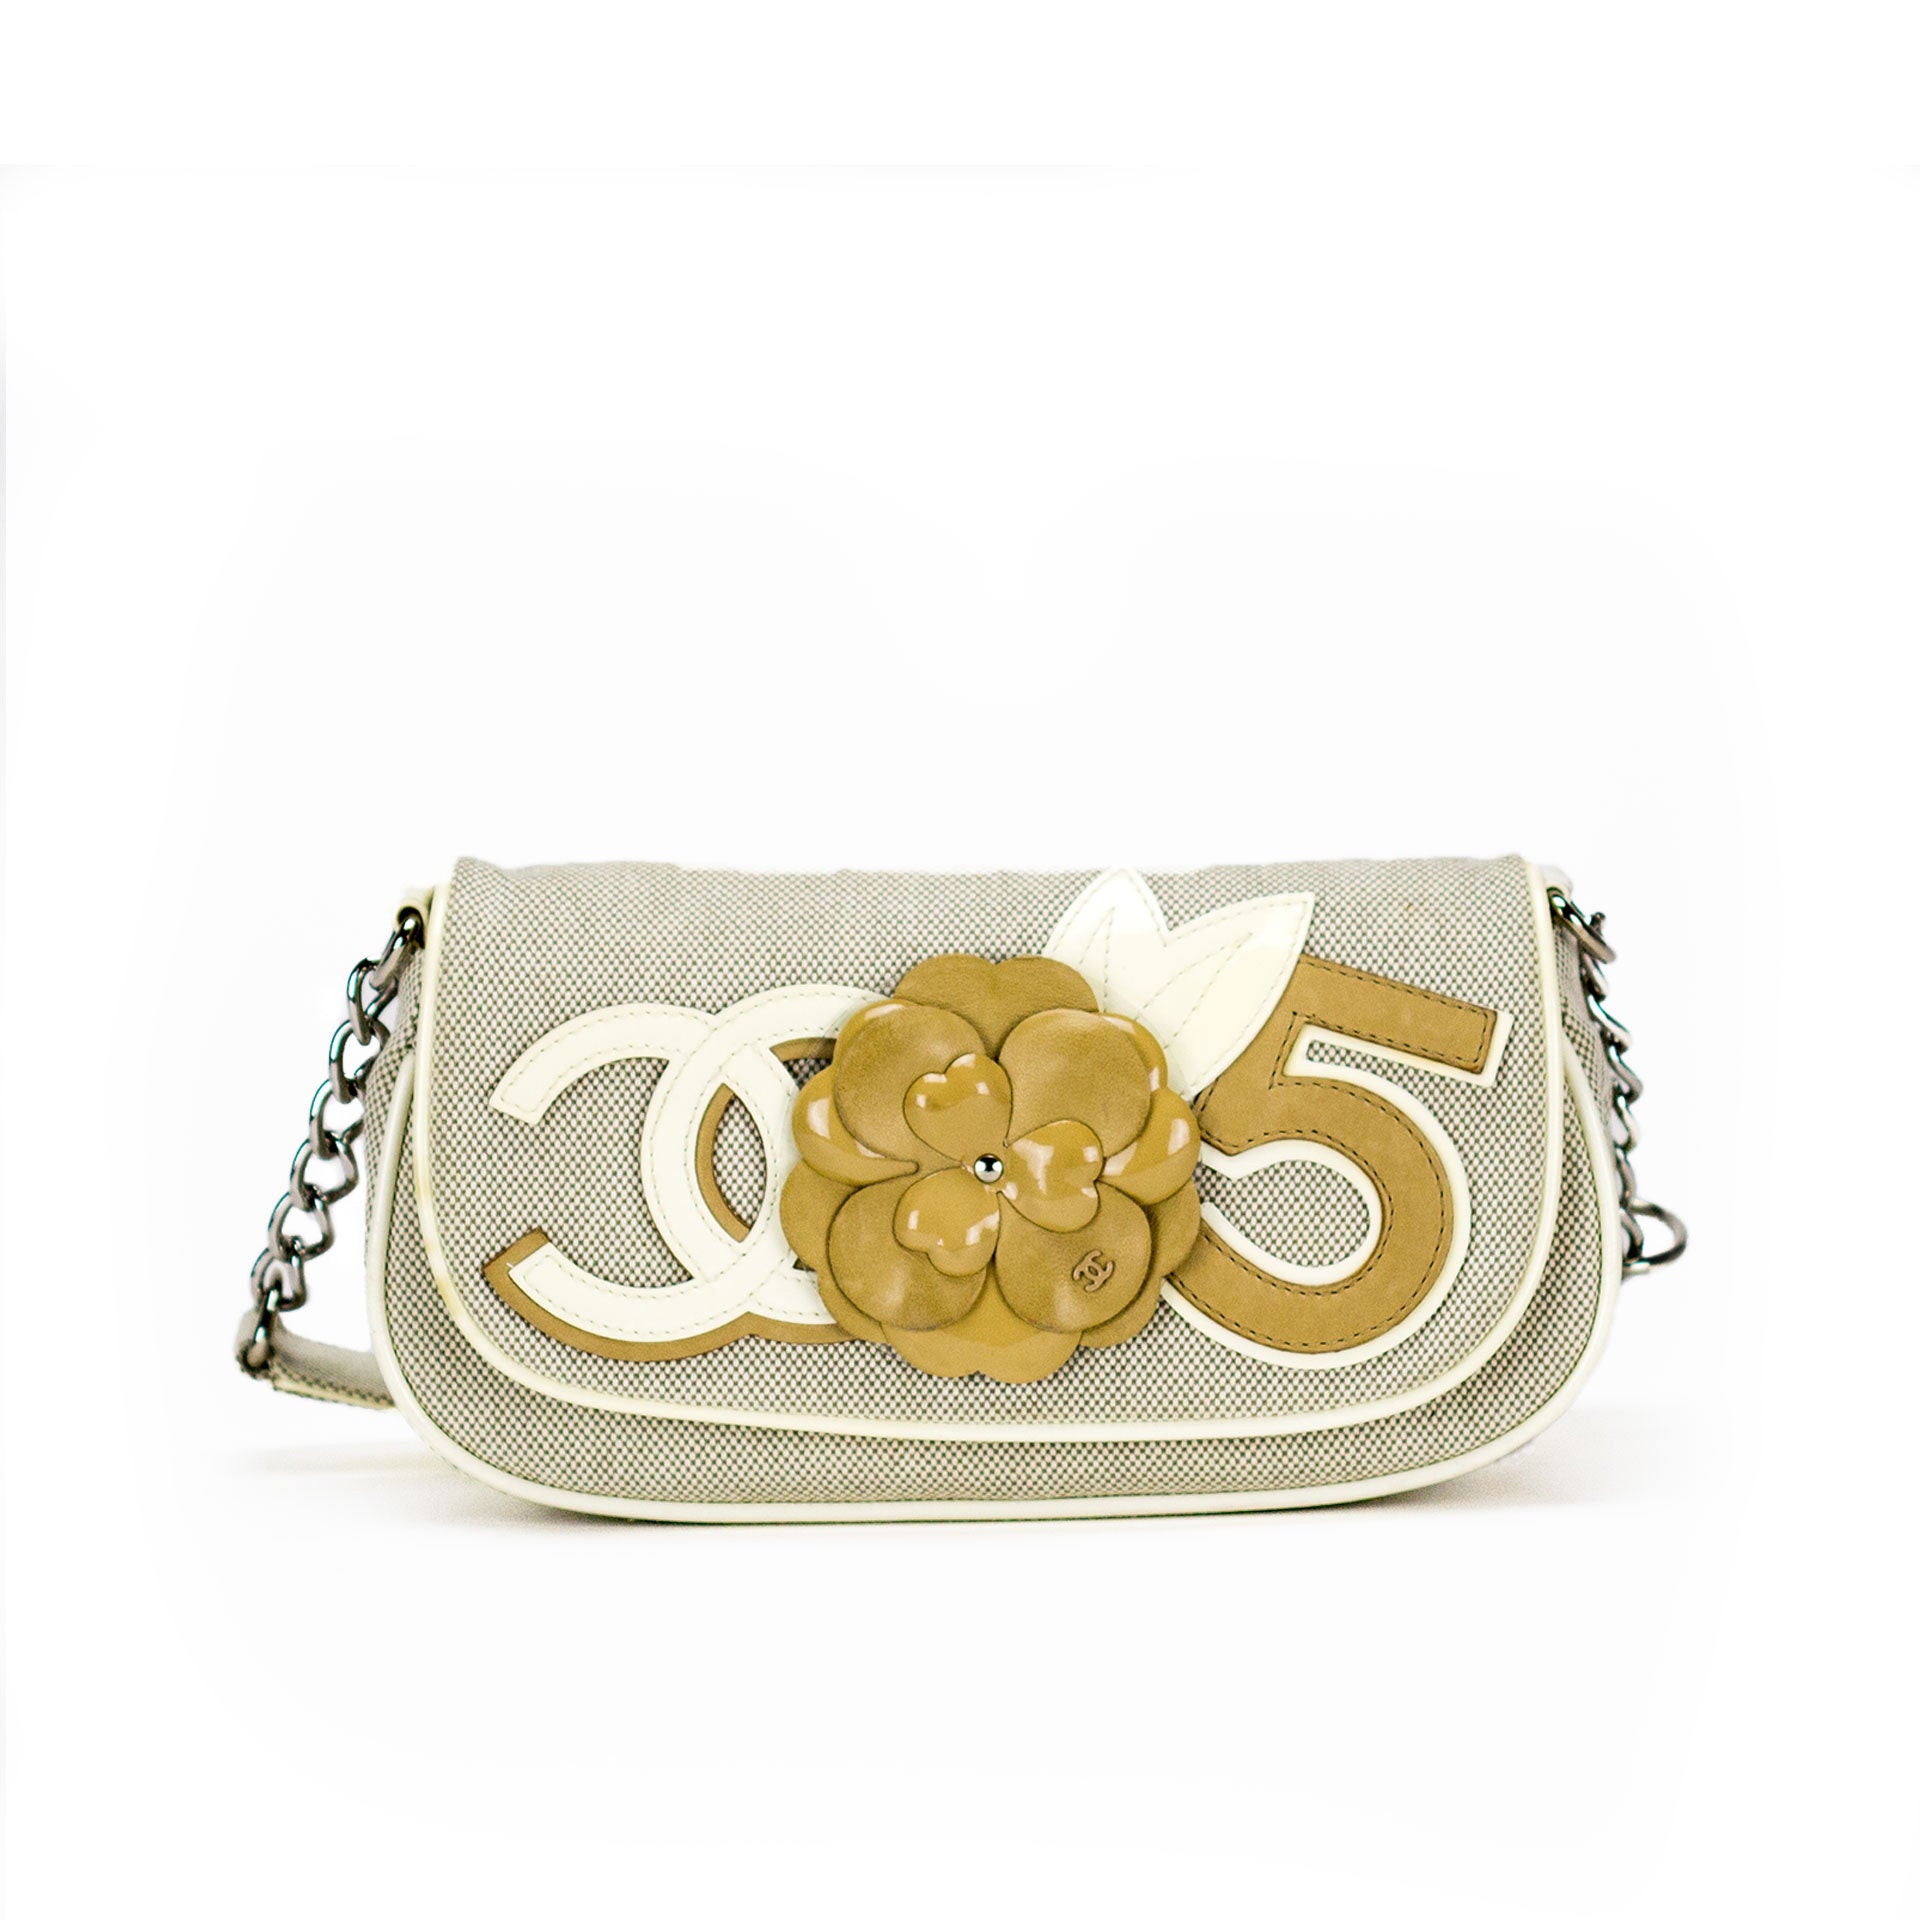 Sold at Auction: Chanel Vintage Beige Lambskin Camellia Tote Bag